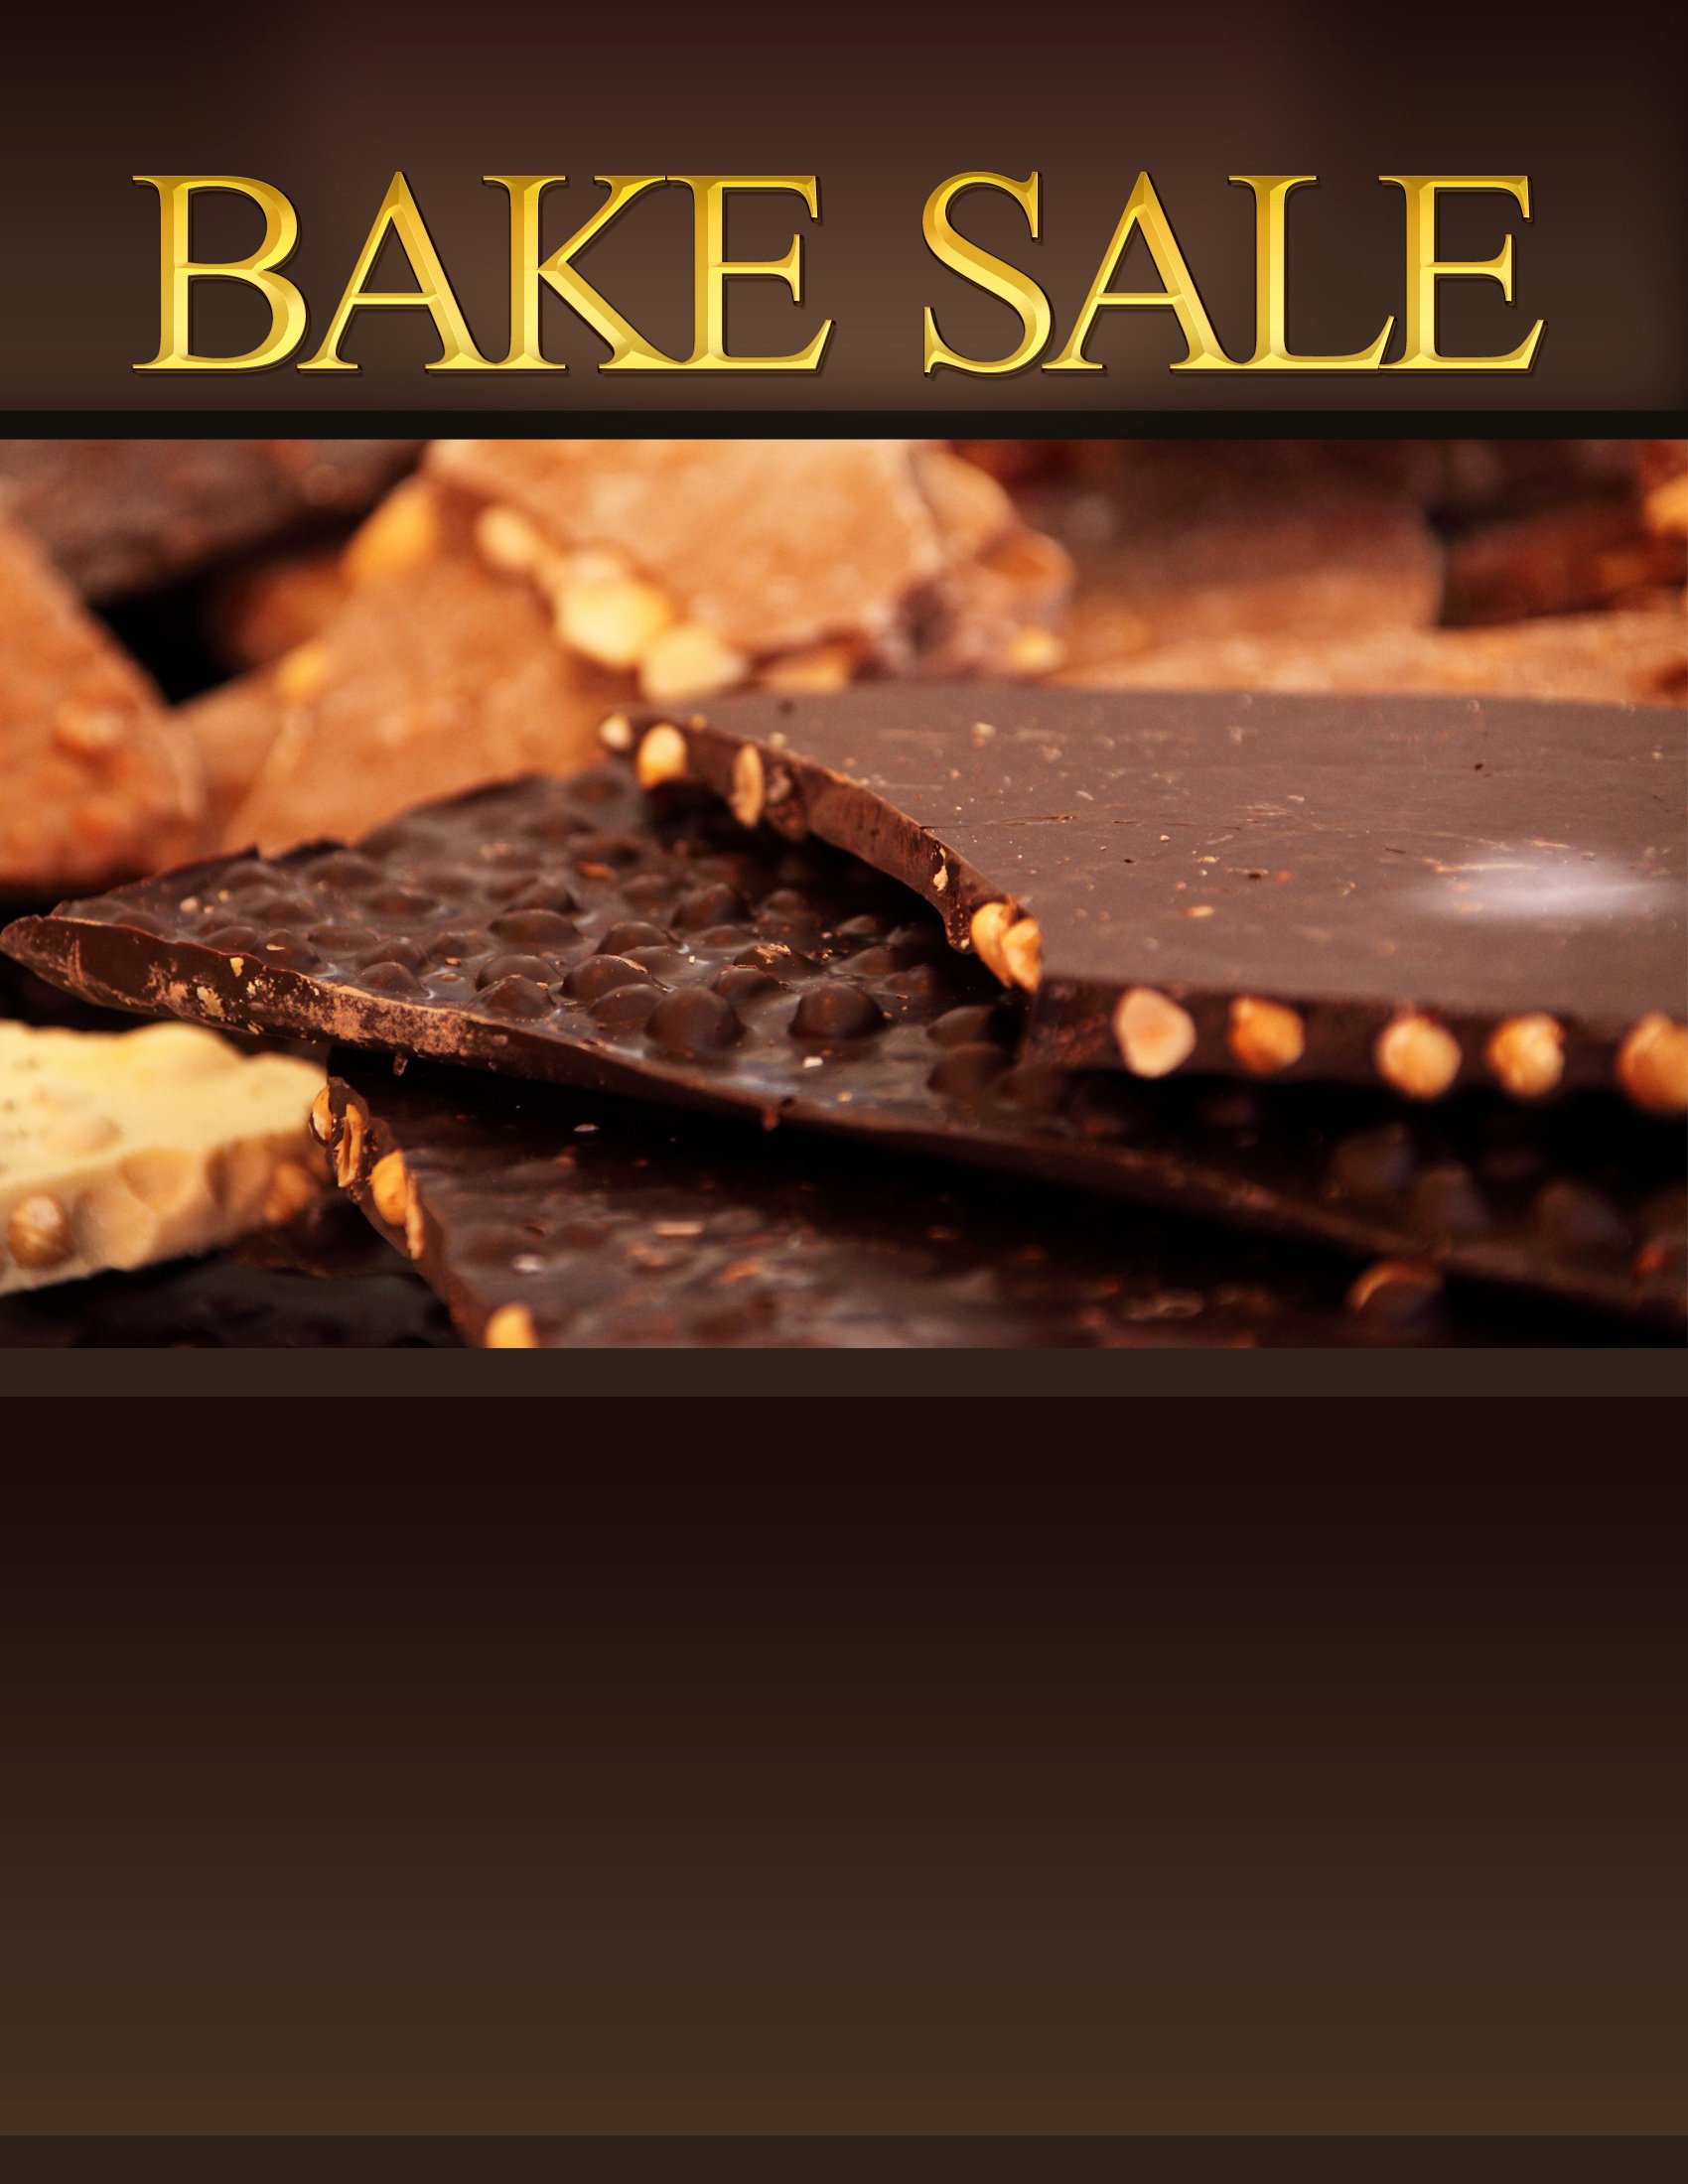 Bake Sale Flyer Templates Free Inspirational Bake Sale Flyers – Free Flyer Designs